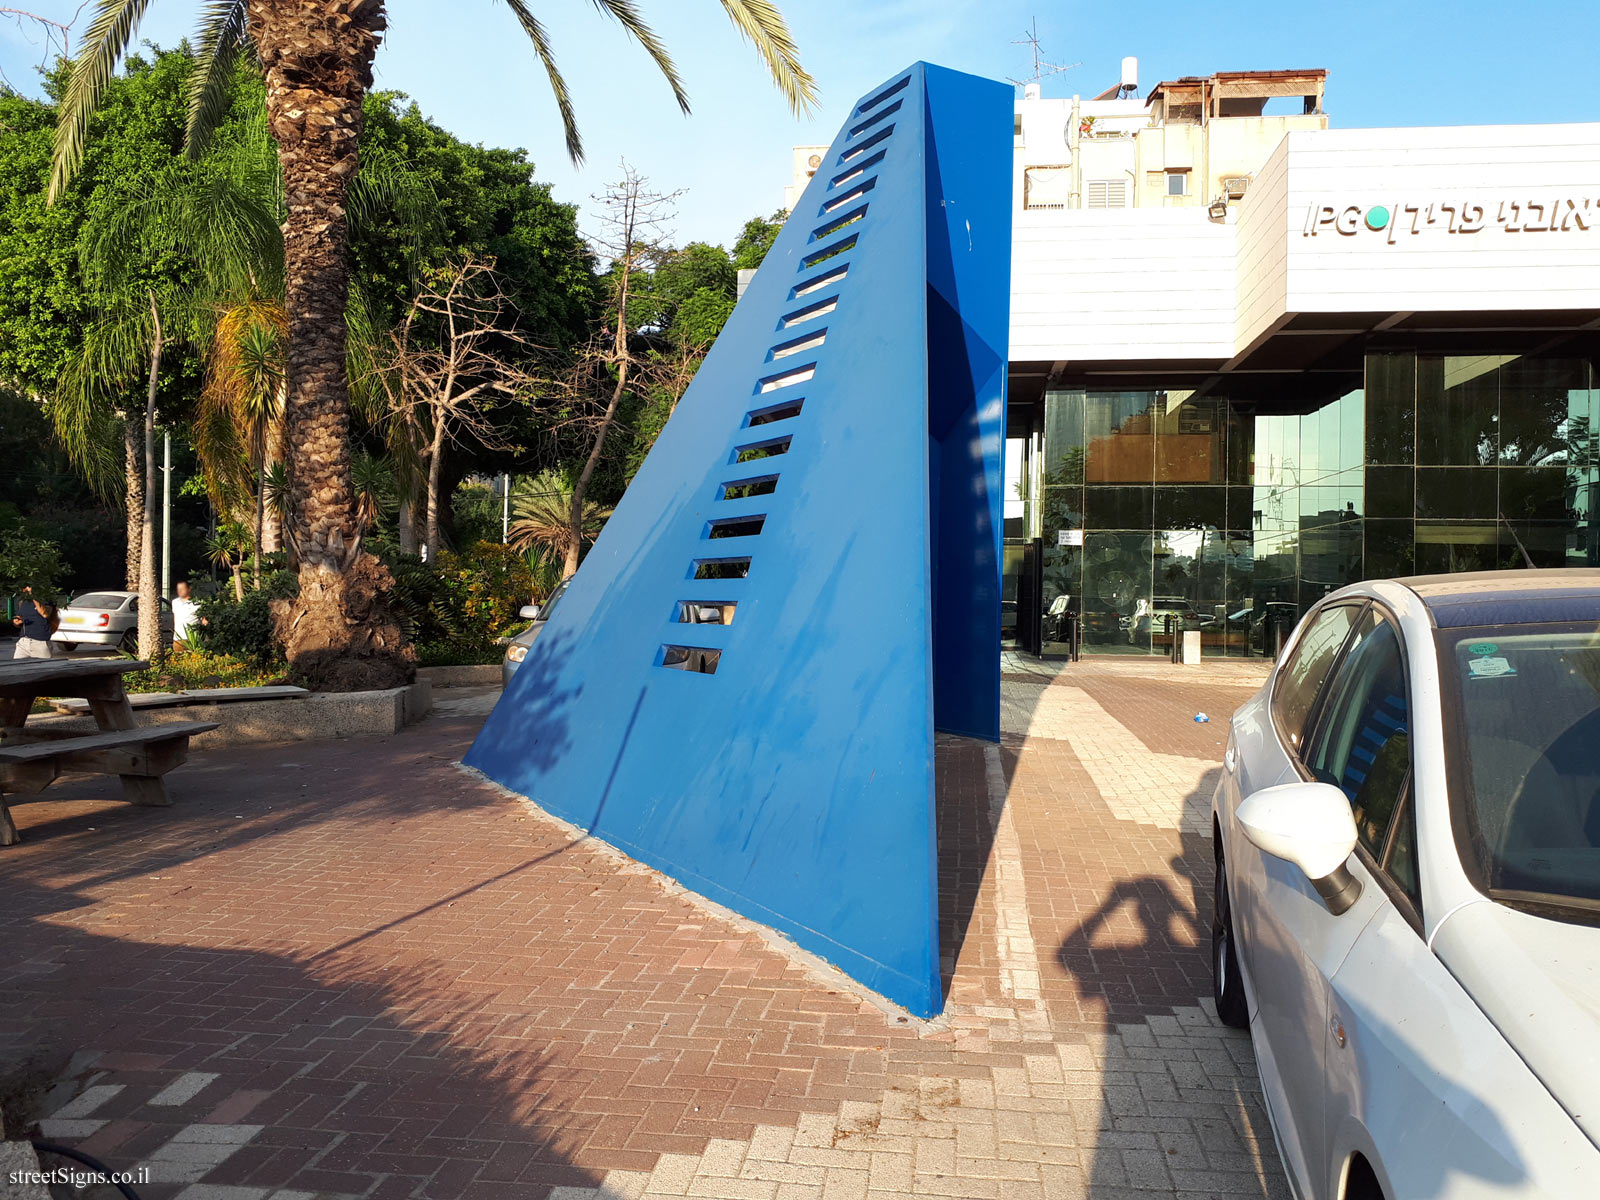 "Blue Sculpture" - Outdoor sculpture by Israel Hadany - Arlozorov St 161, Tel Aviv-Yafo, Israel